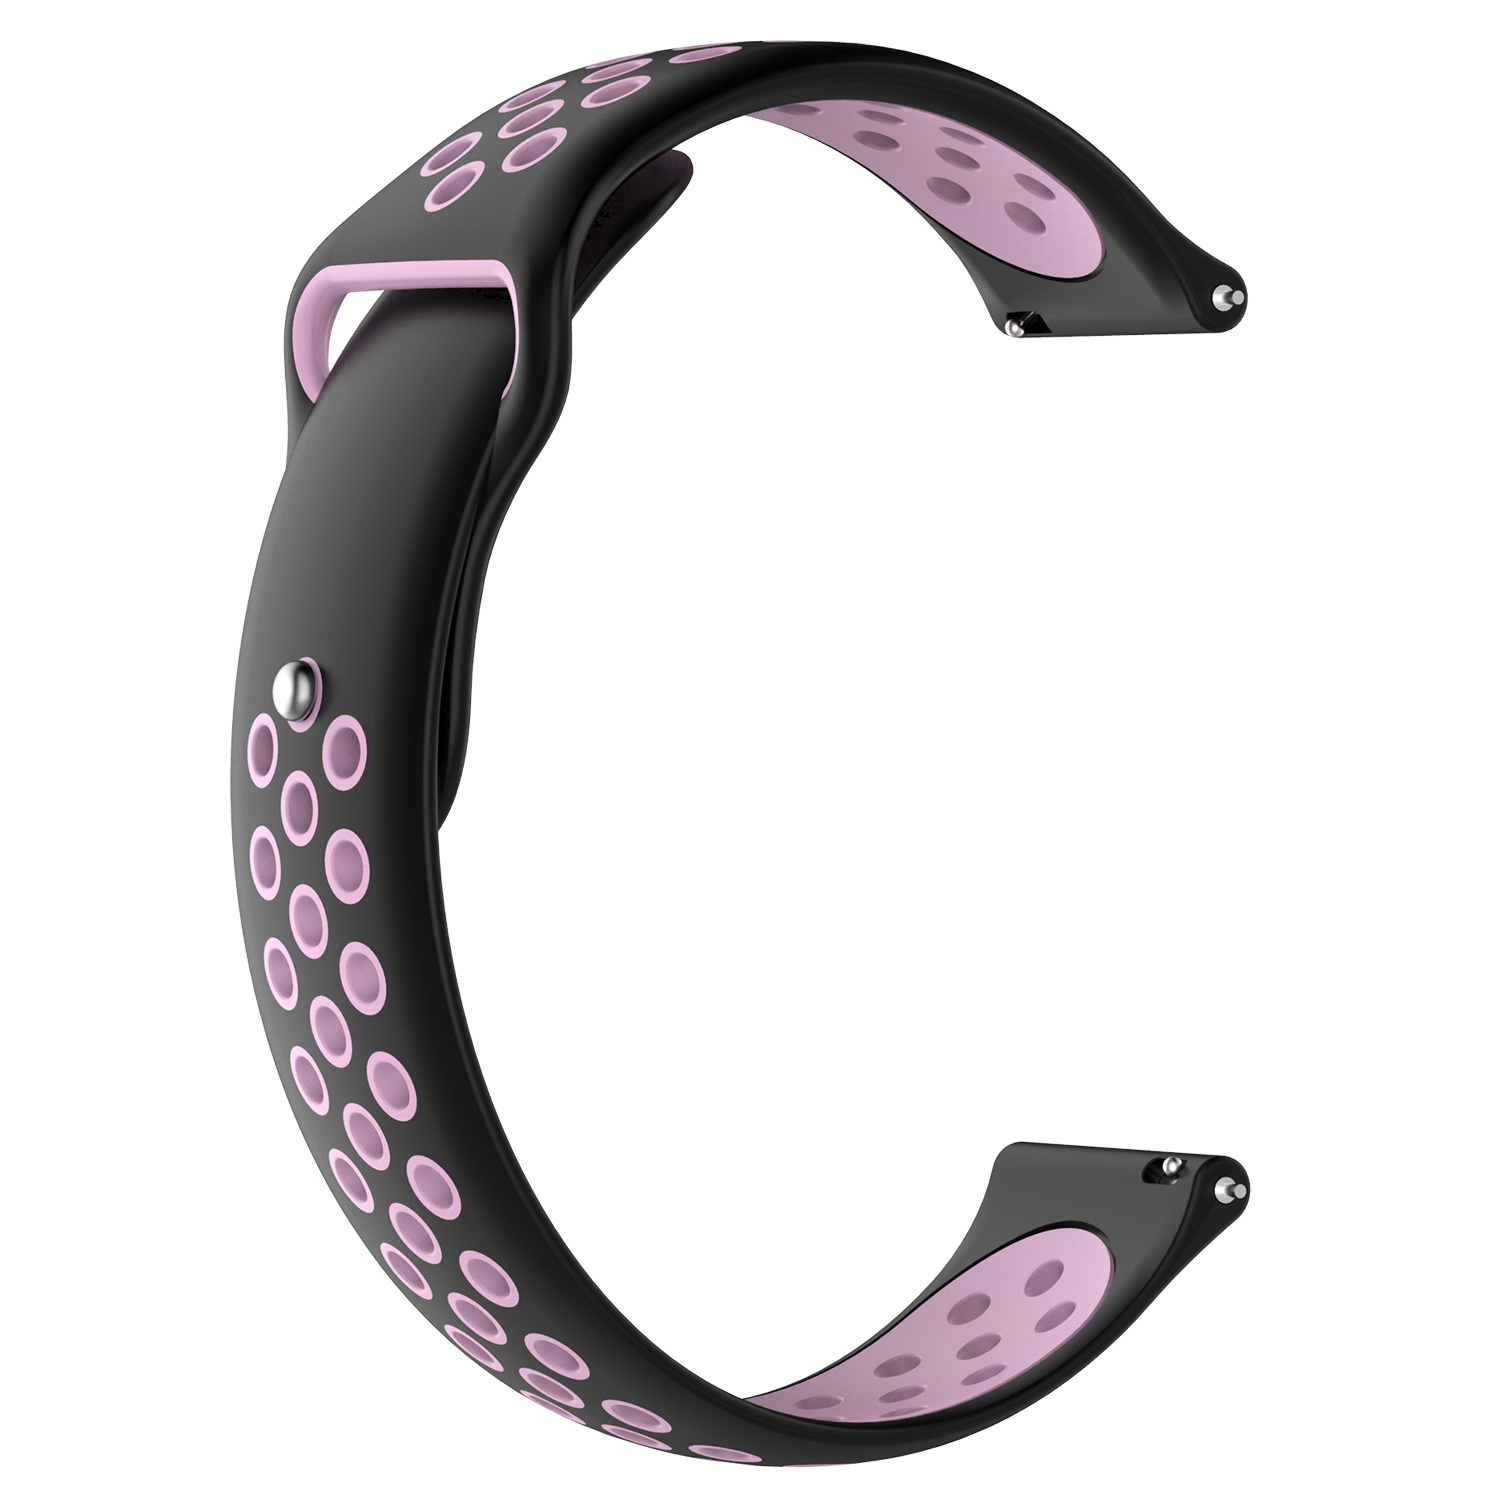 Cinturino doppio sport per Samsung Galaxy Watch - nero rosa